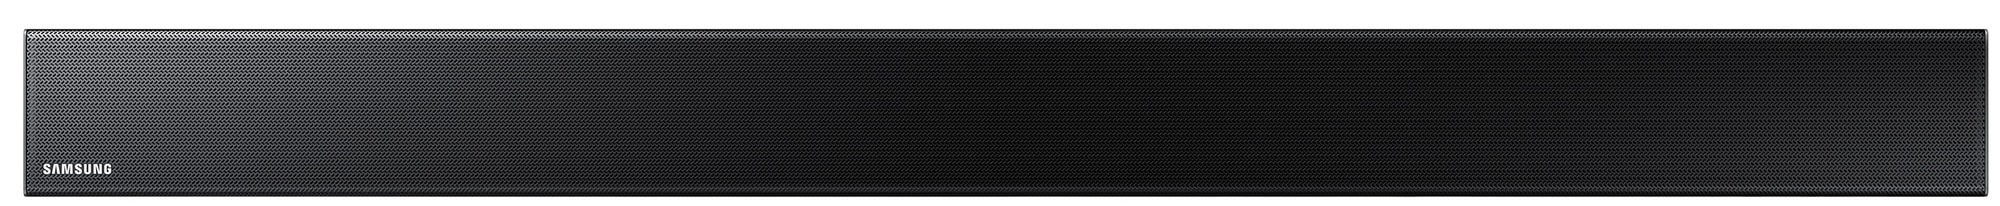 Samsung 3.1 lydplanke HW-K560 (sort) - Elkjøp